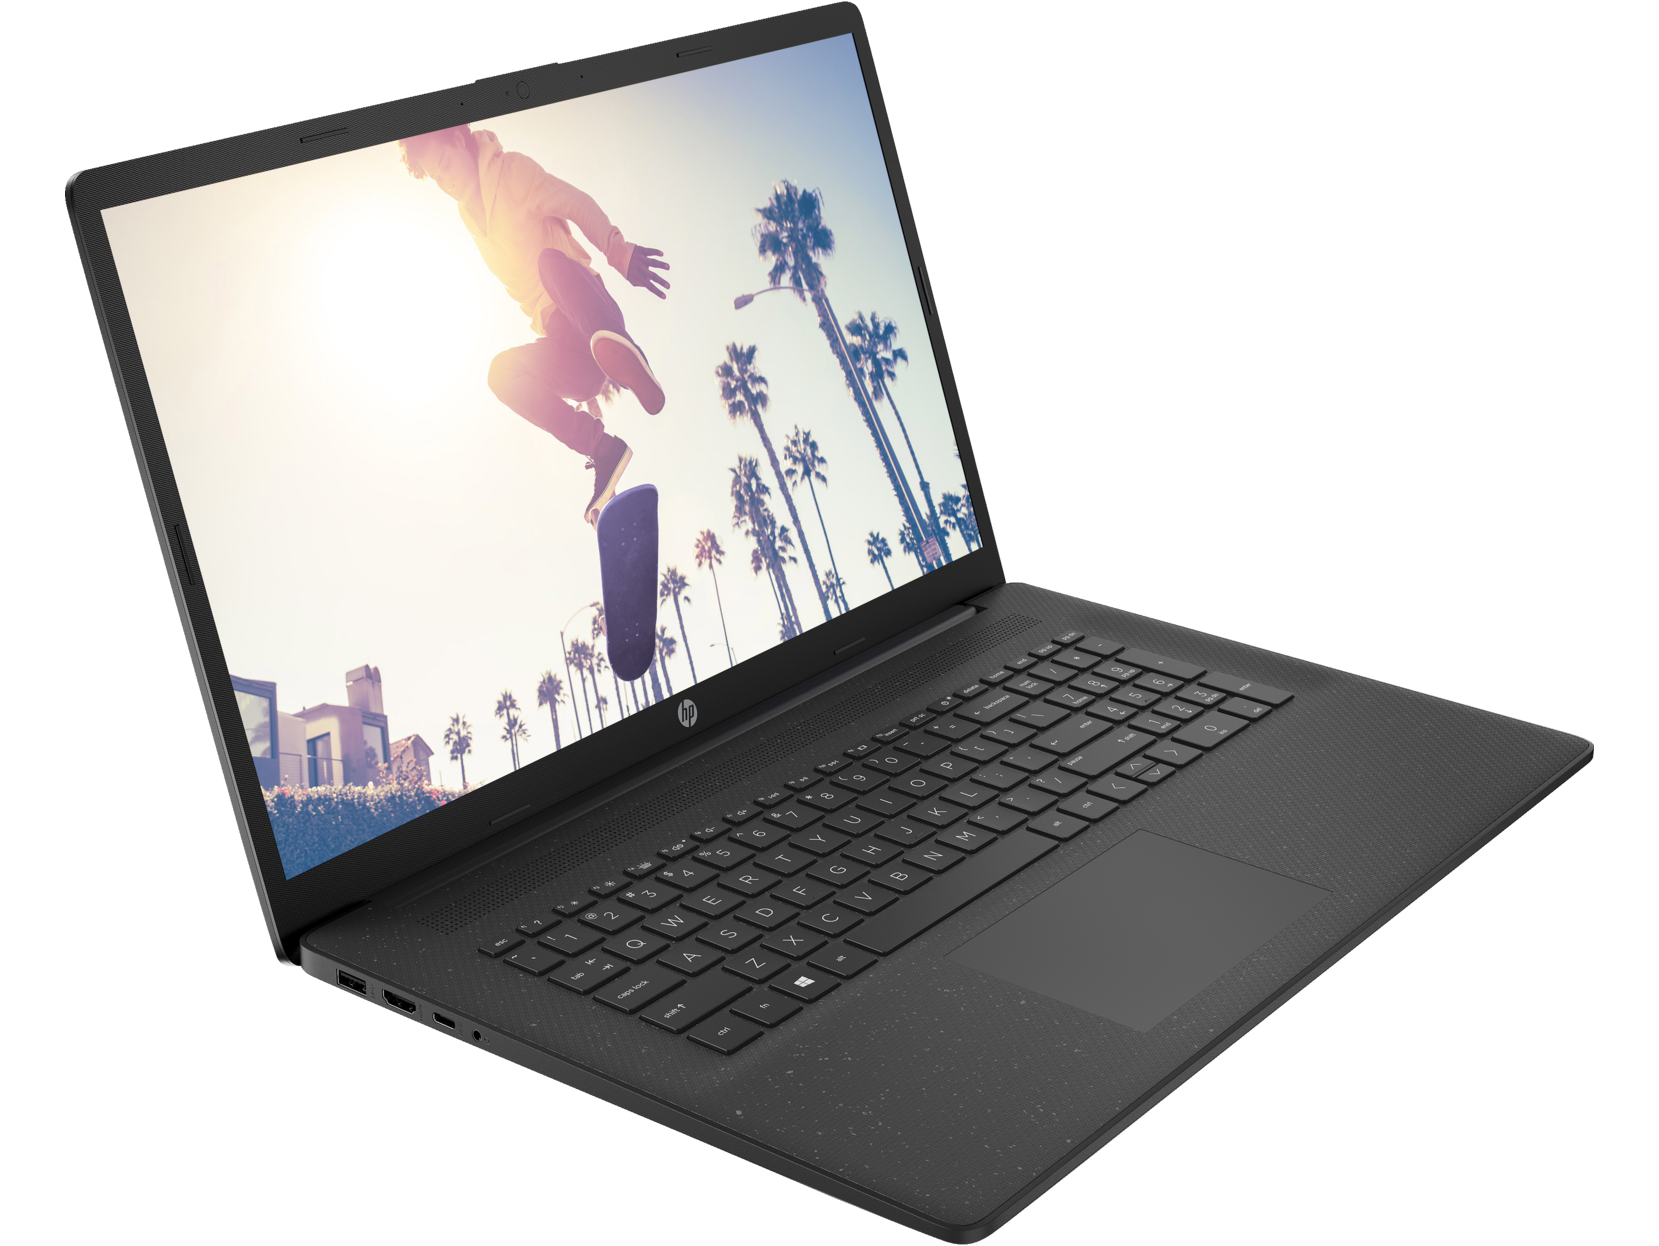 HP Laptop 17.3" Core i7 1165G7 16GB 1TB Hdd + 256GB Ssd Open Box 17-CN0097nr